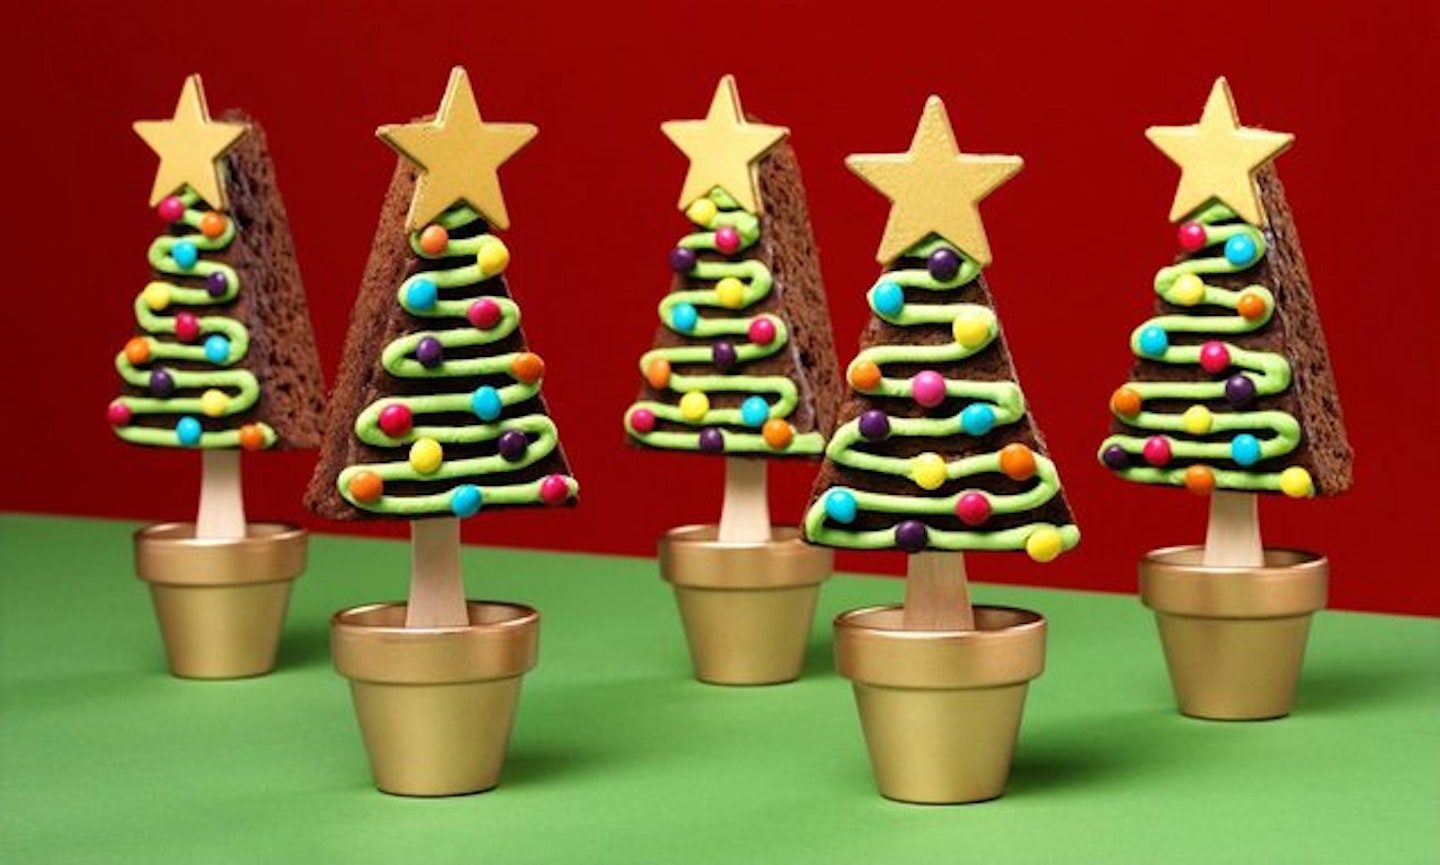 Christmas Tree Brownie Pops